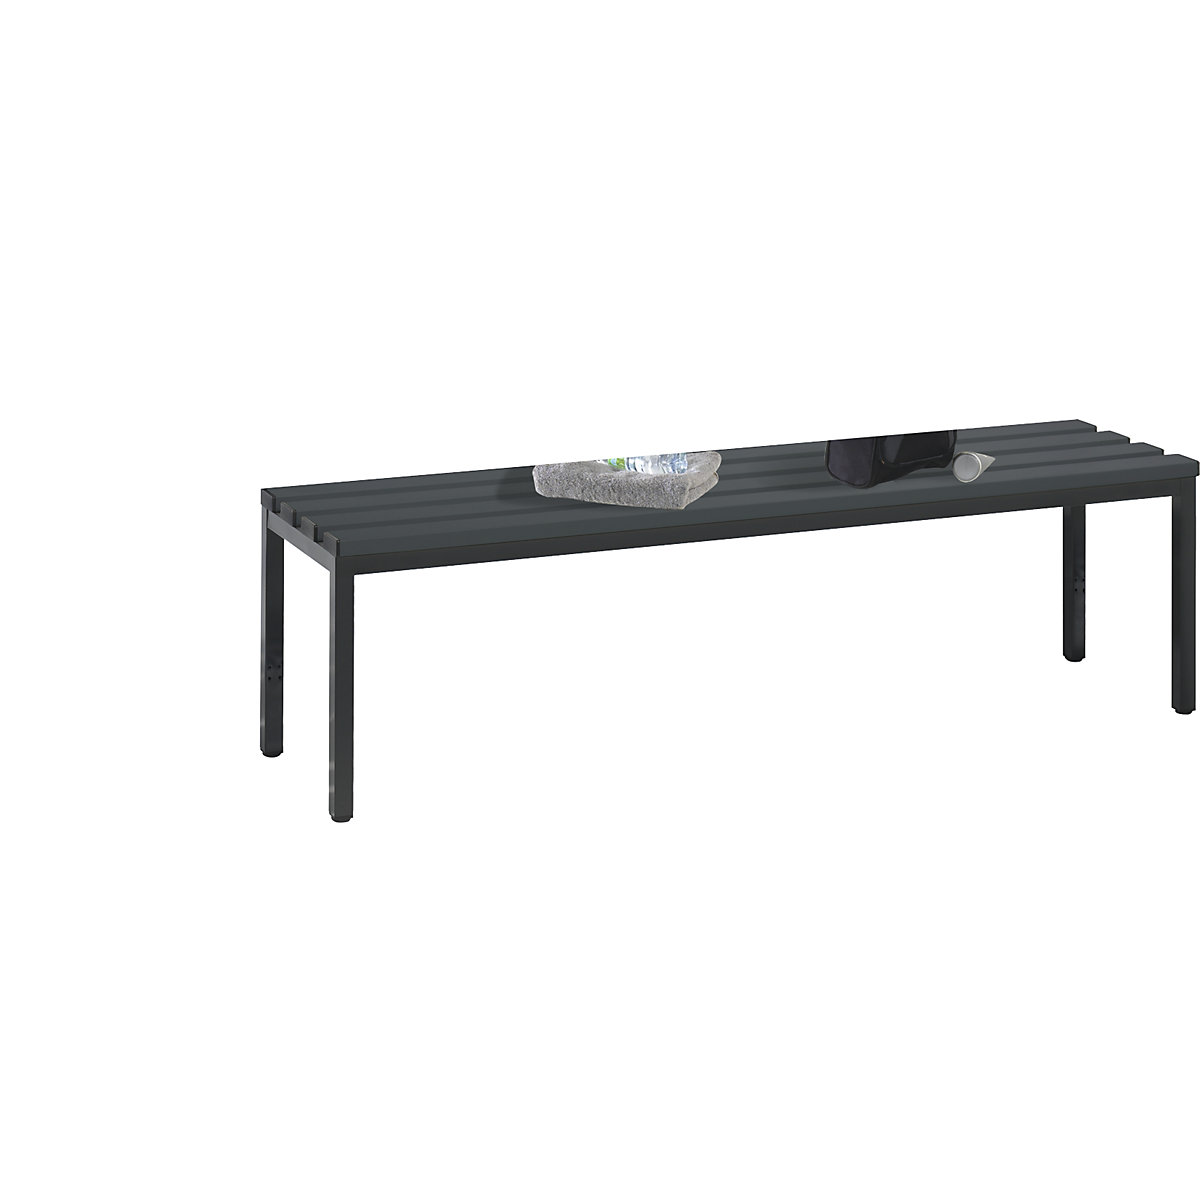 BASIC cloakroom bench – C+P, plastic, length 1500 mm, black grey-9